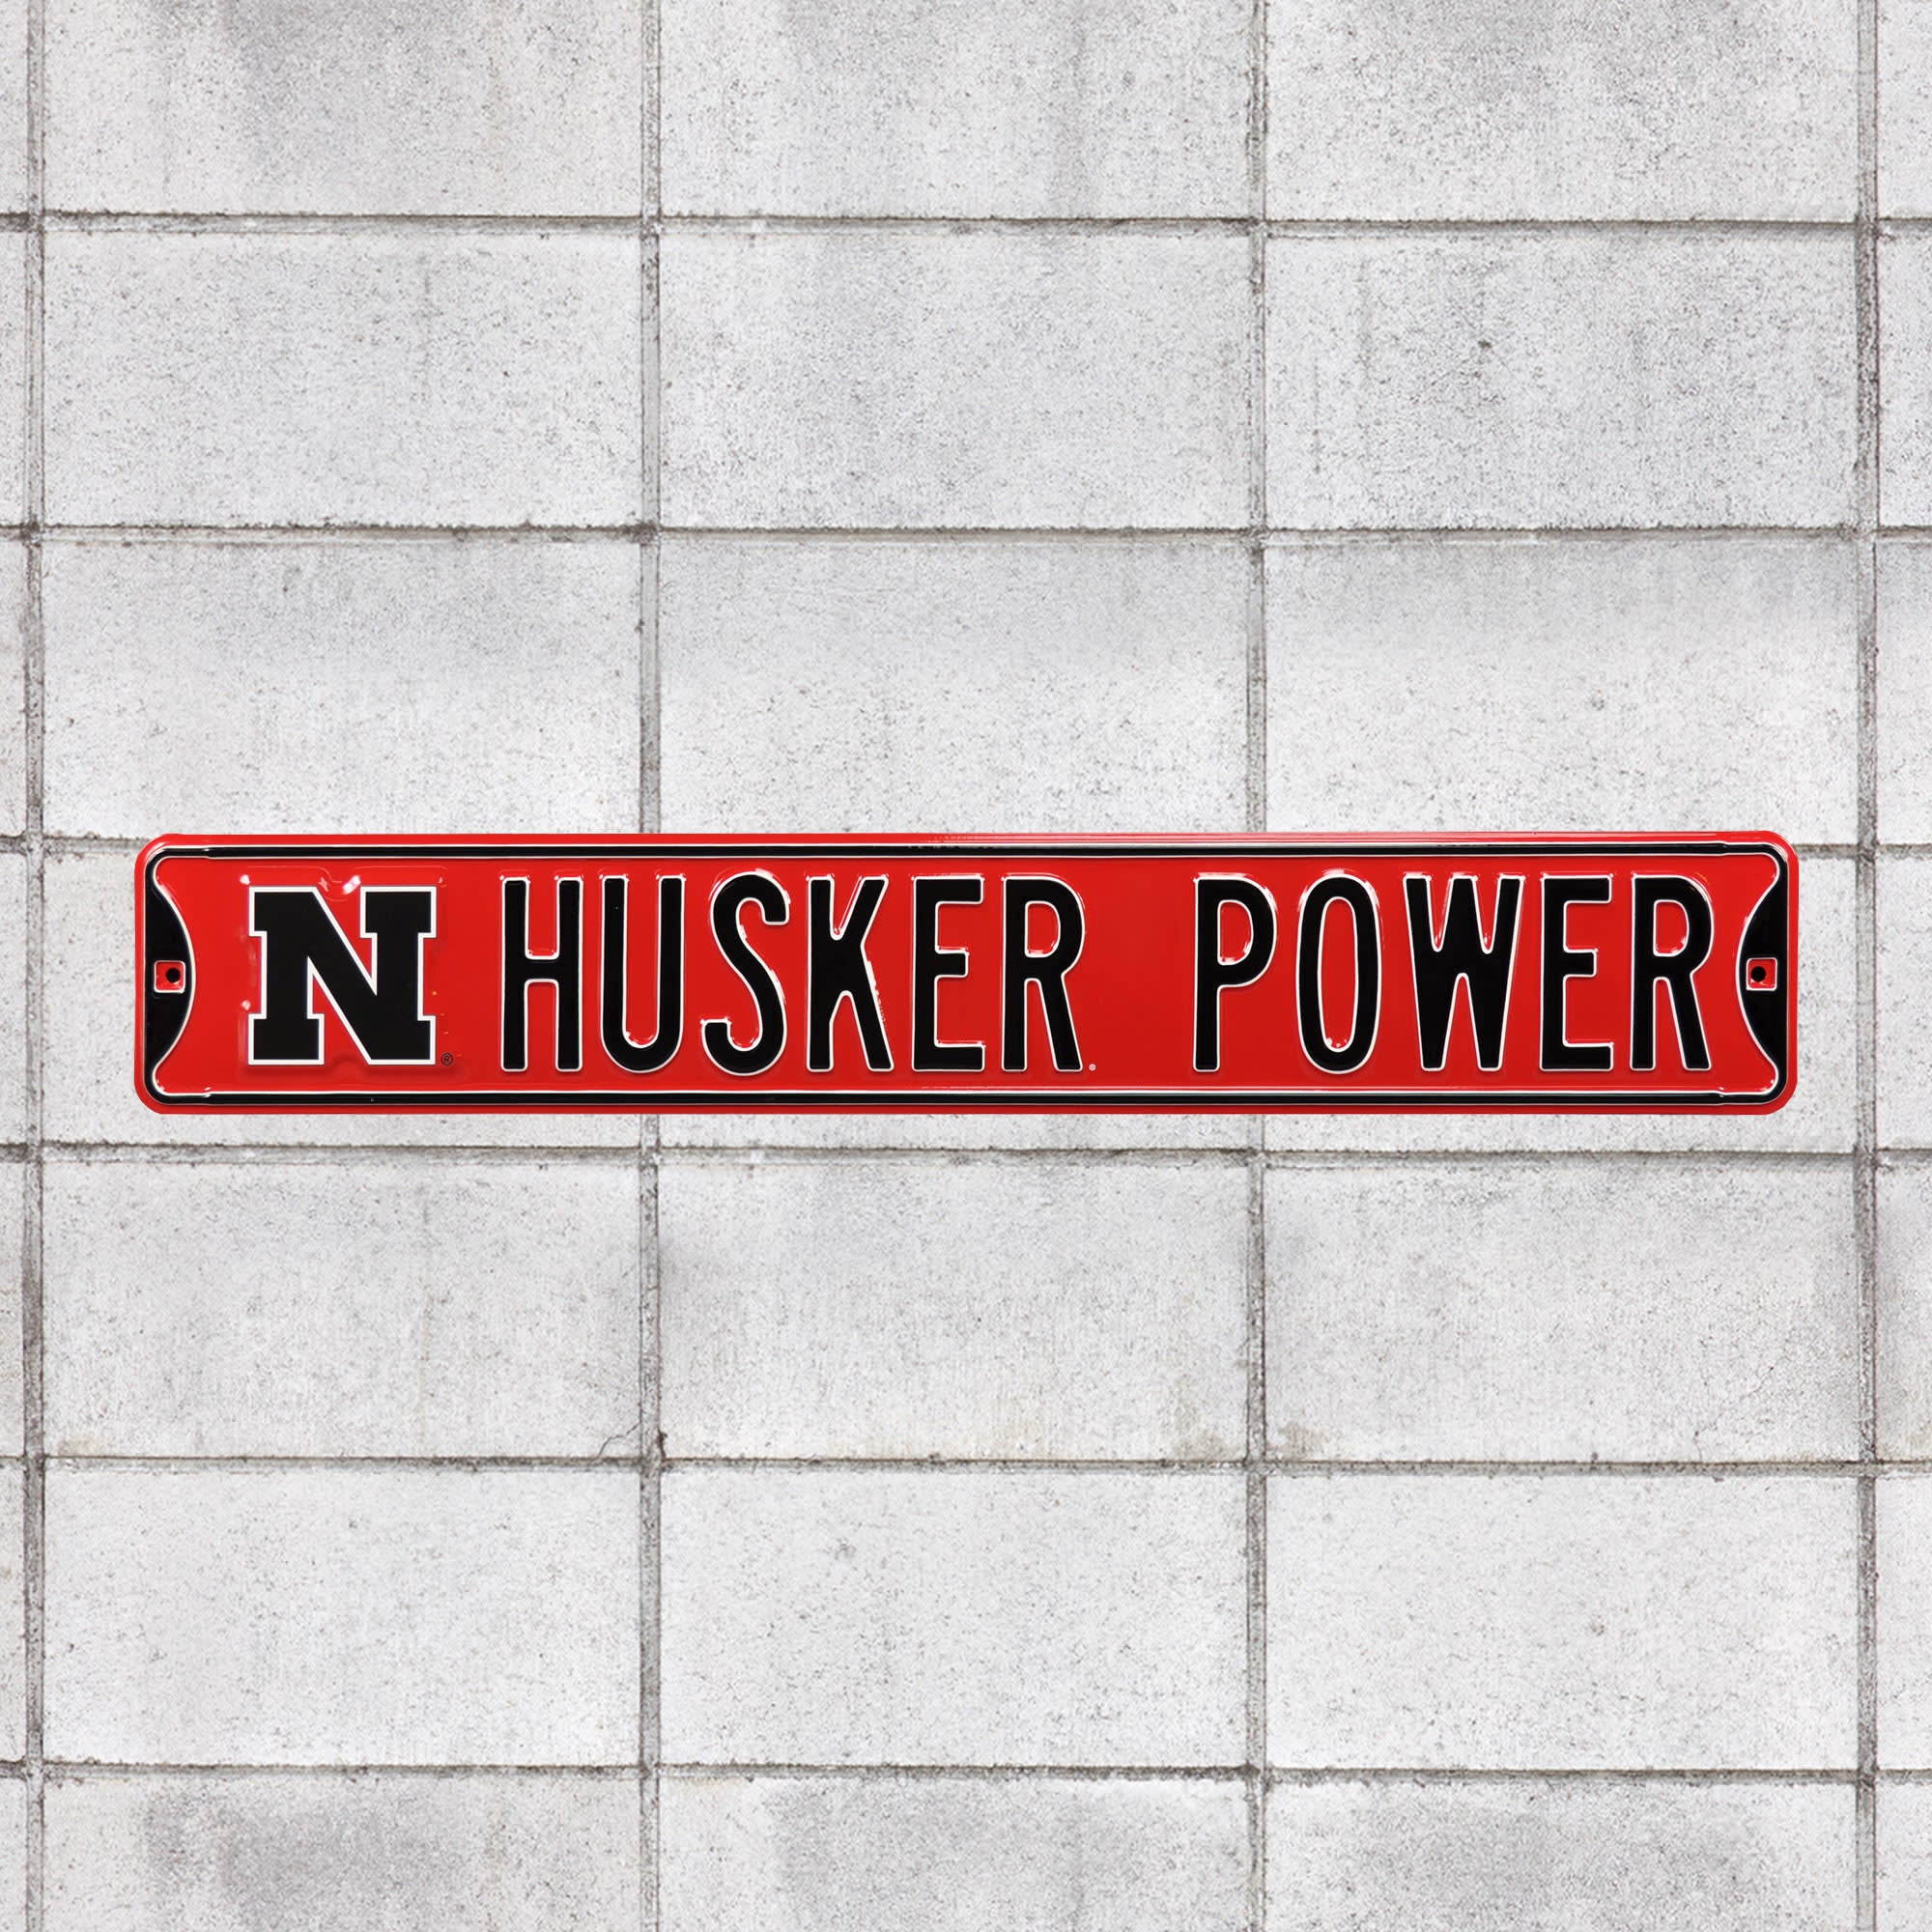 Nebraska Cornhuskers: Husker Power - Officially Licensed Metal Street Sign 36.0"W x 6.0"H by Fathead | 100% Steel